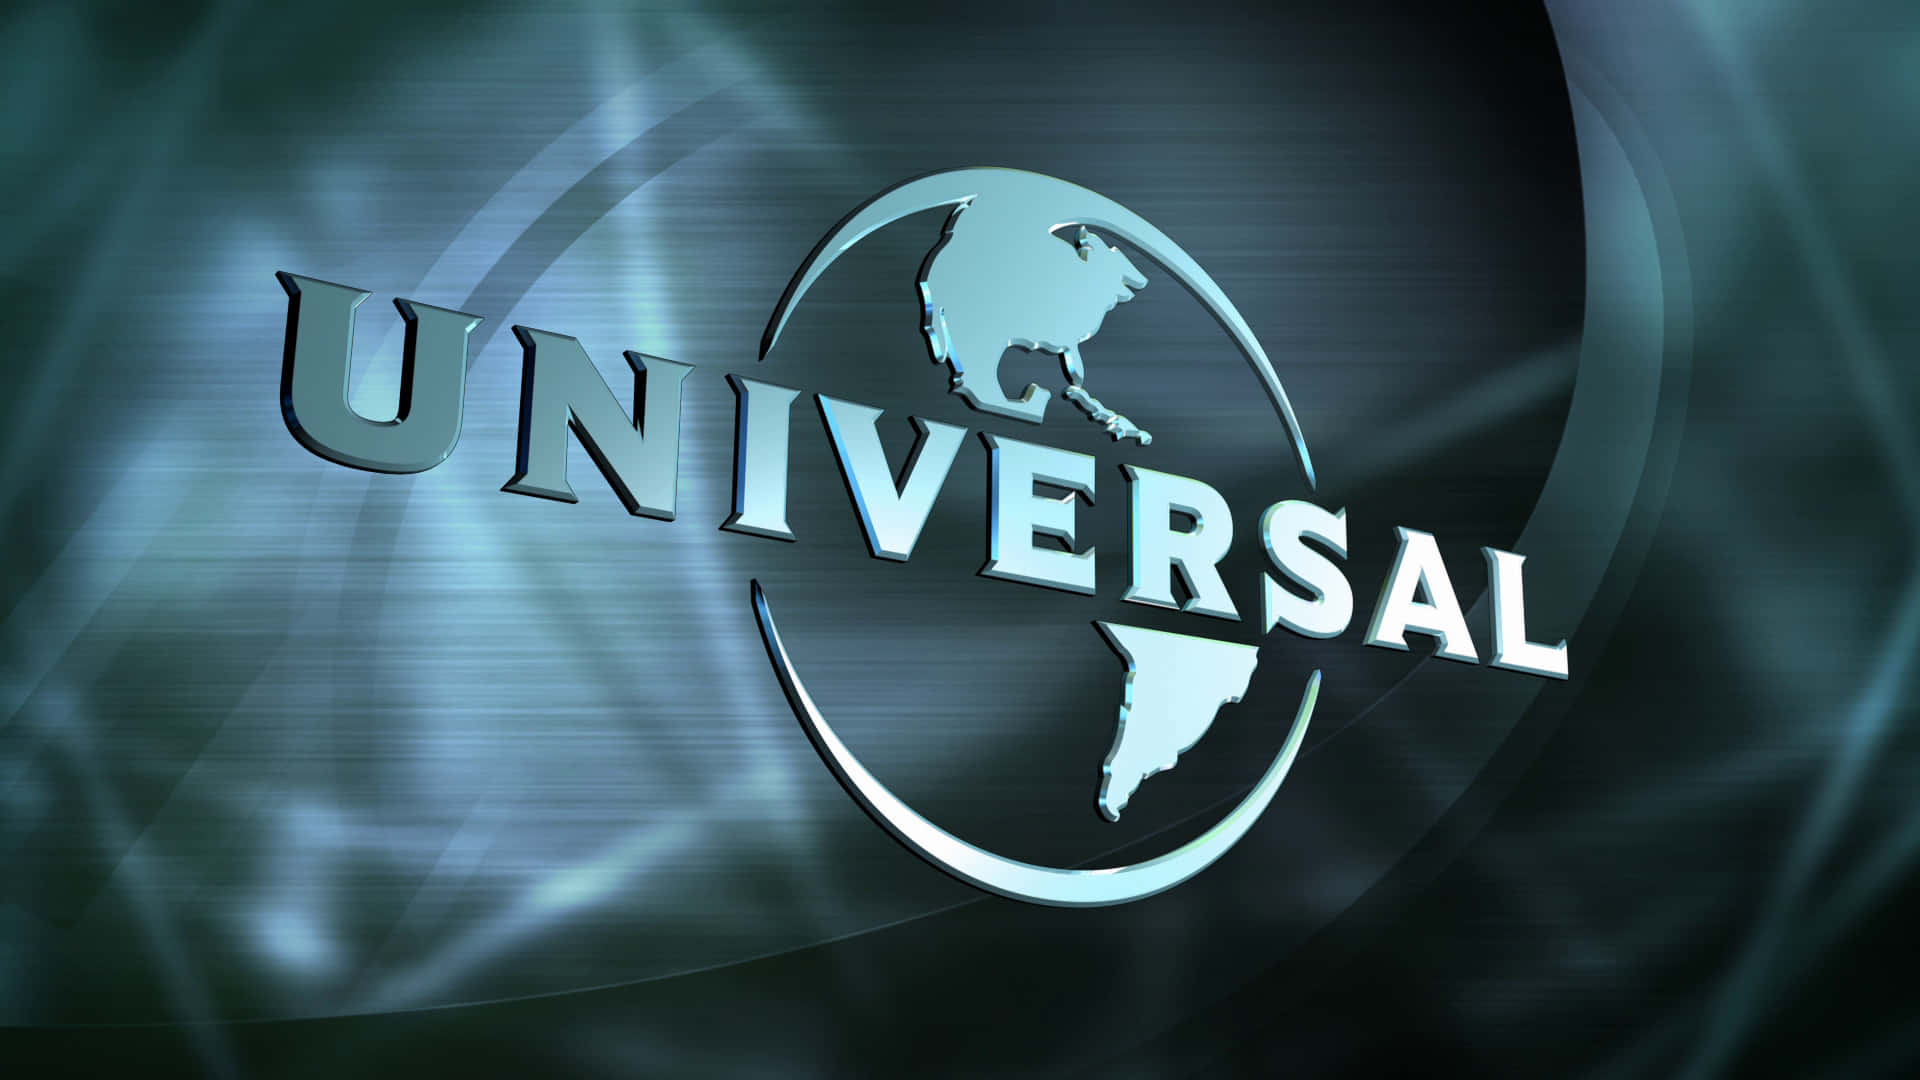 Immaginedel Logo Di Universal Pictures In Argento.